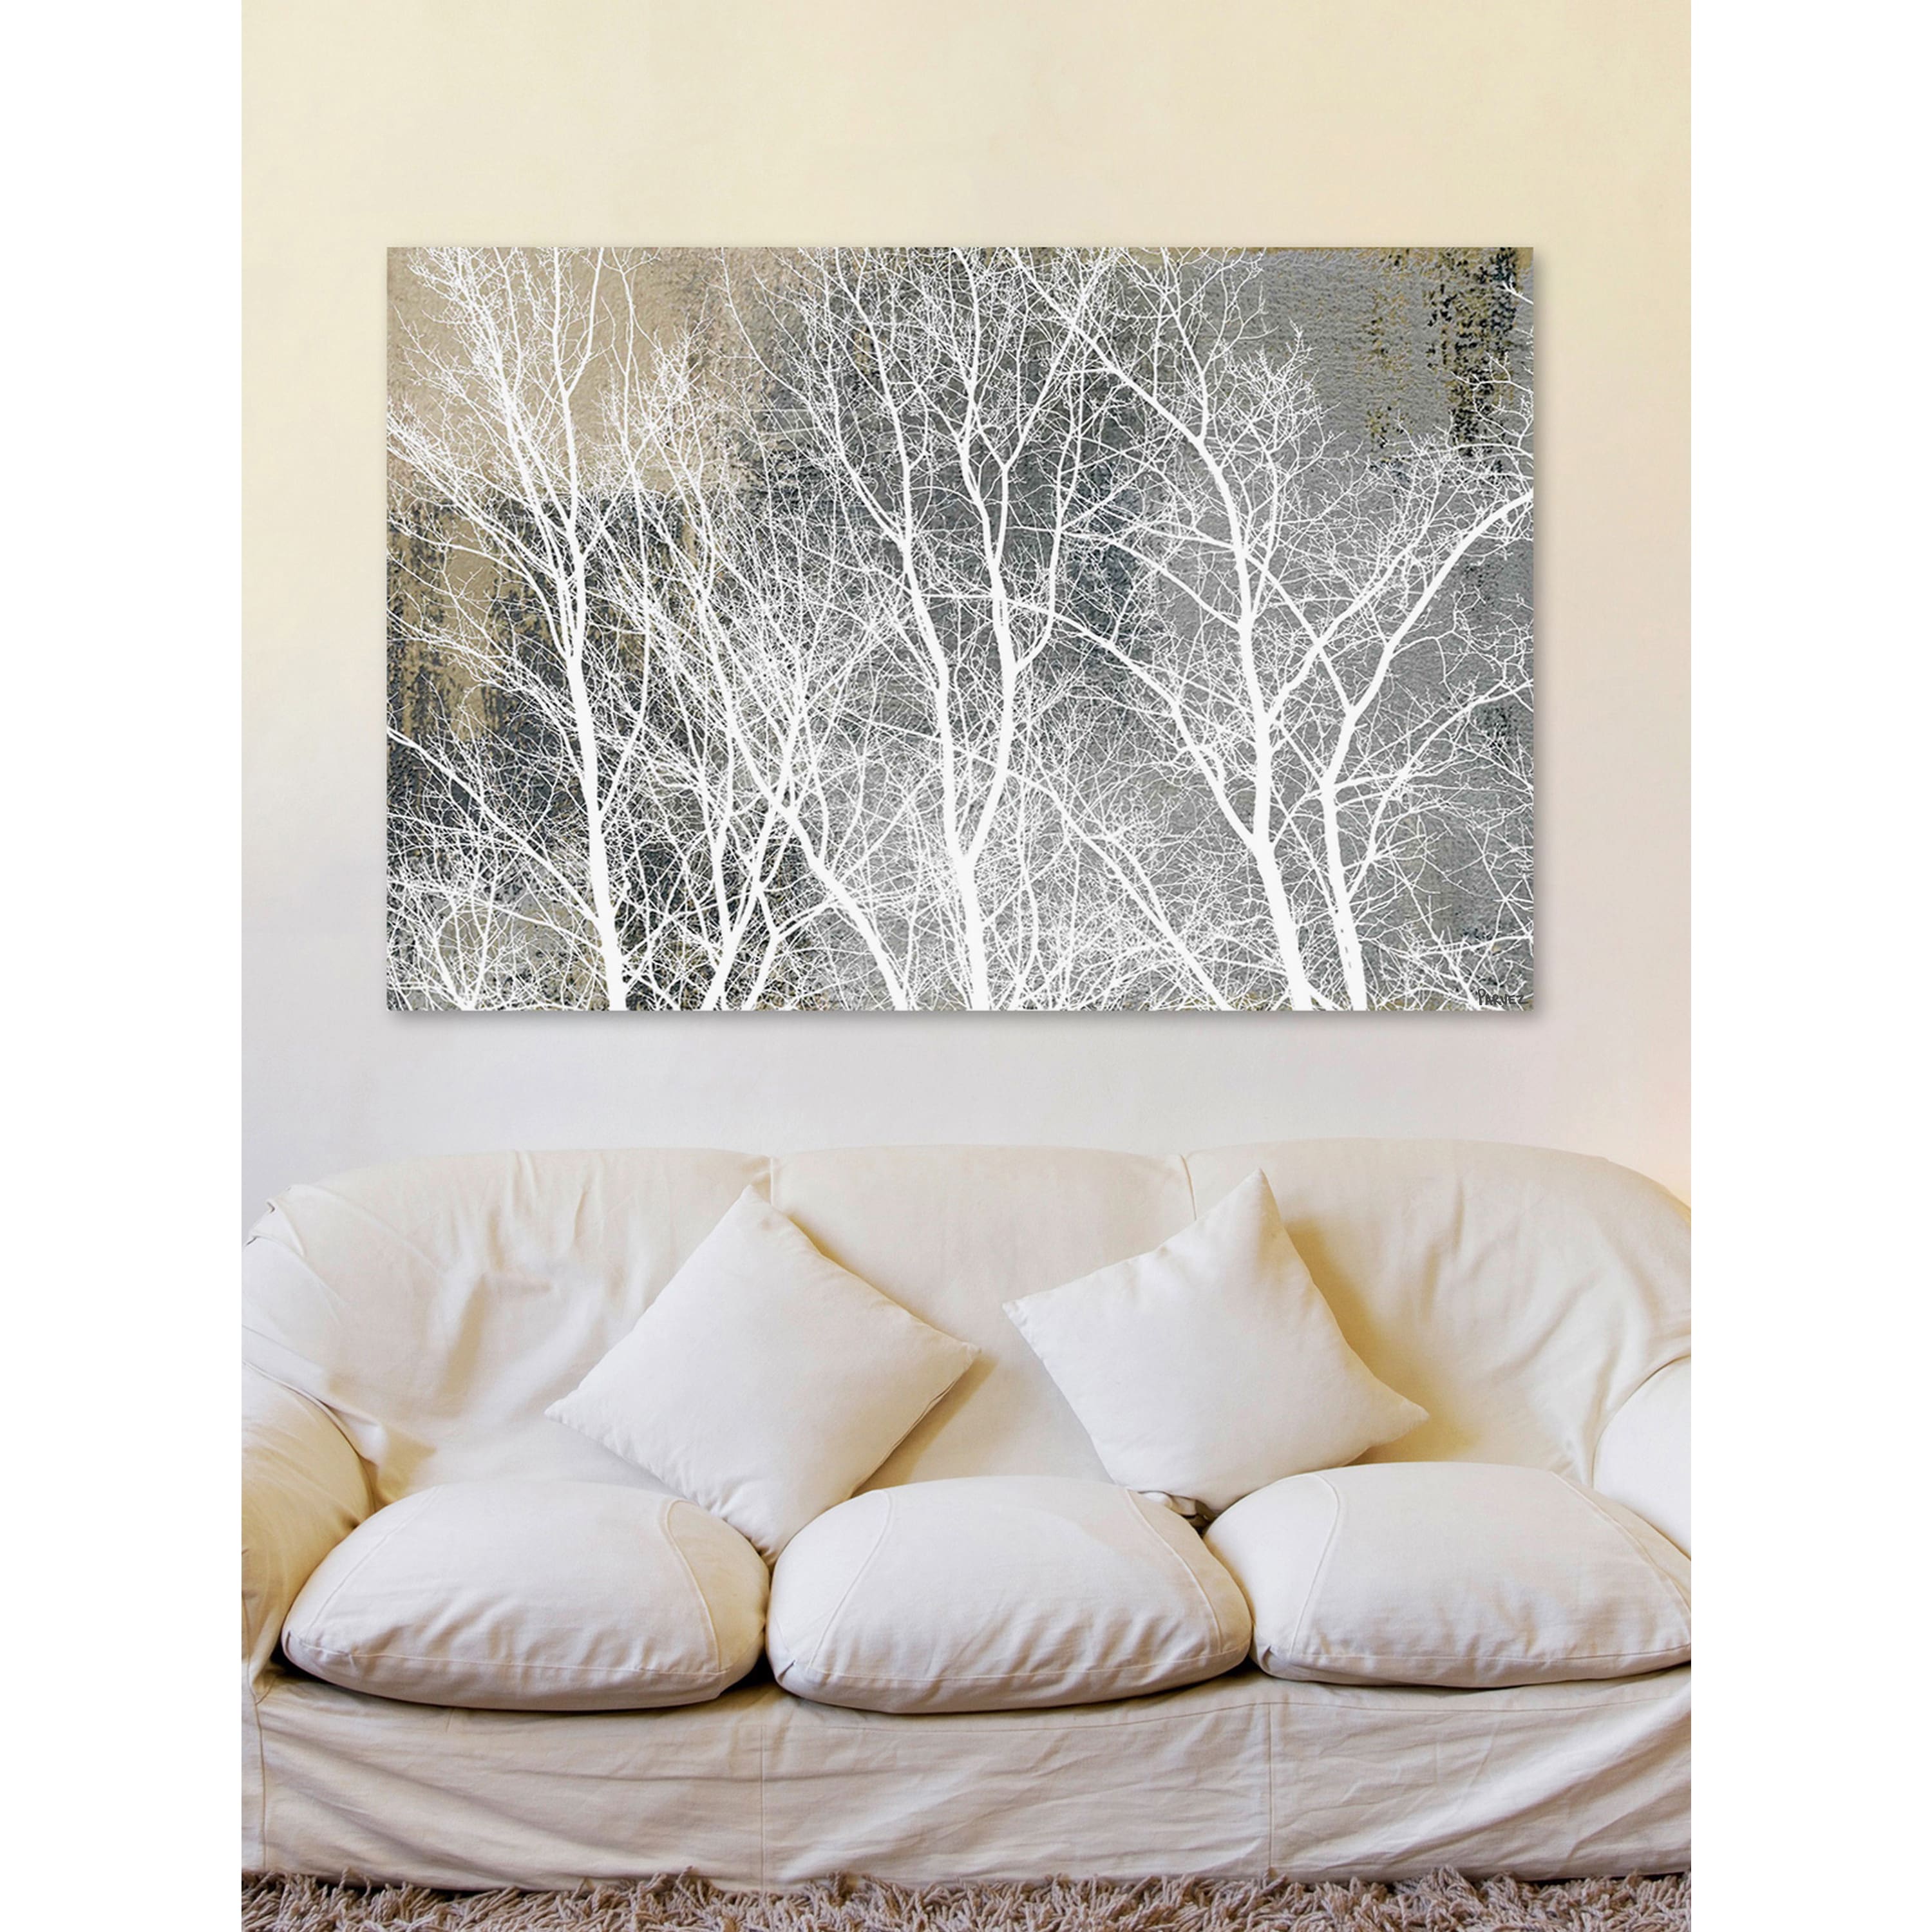 Handmade Parvez Taj - Frosty White Branches Print on Wrapped Canvas ...